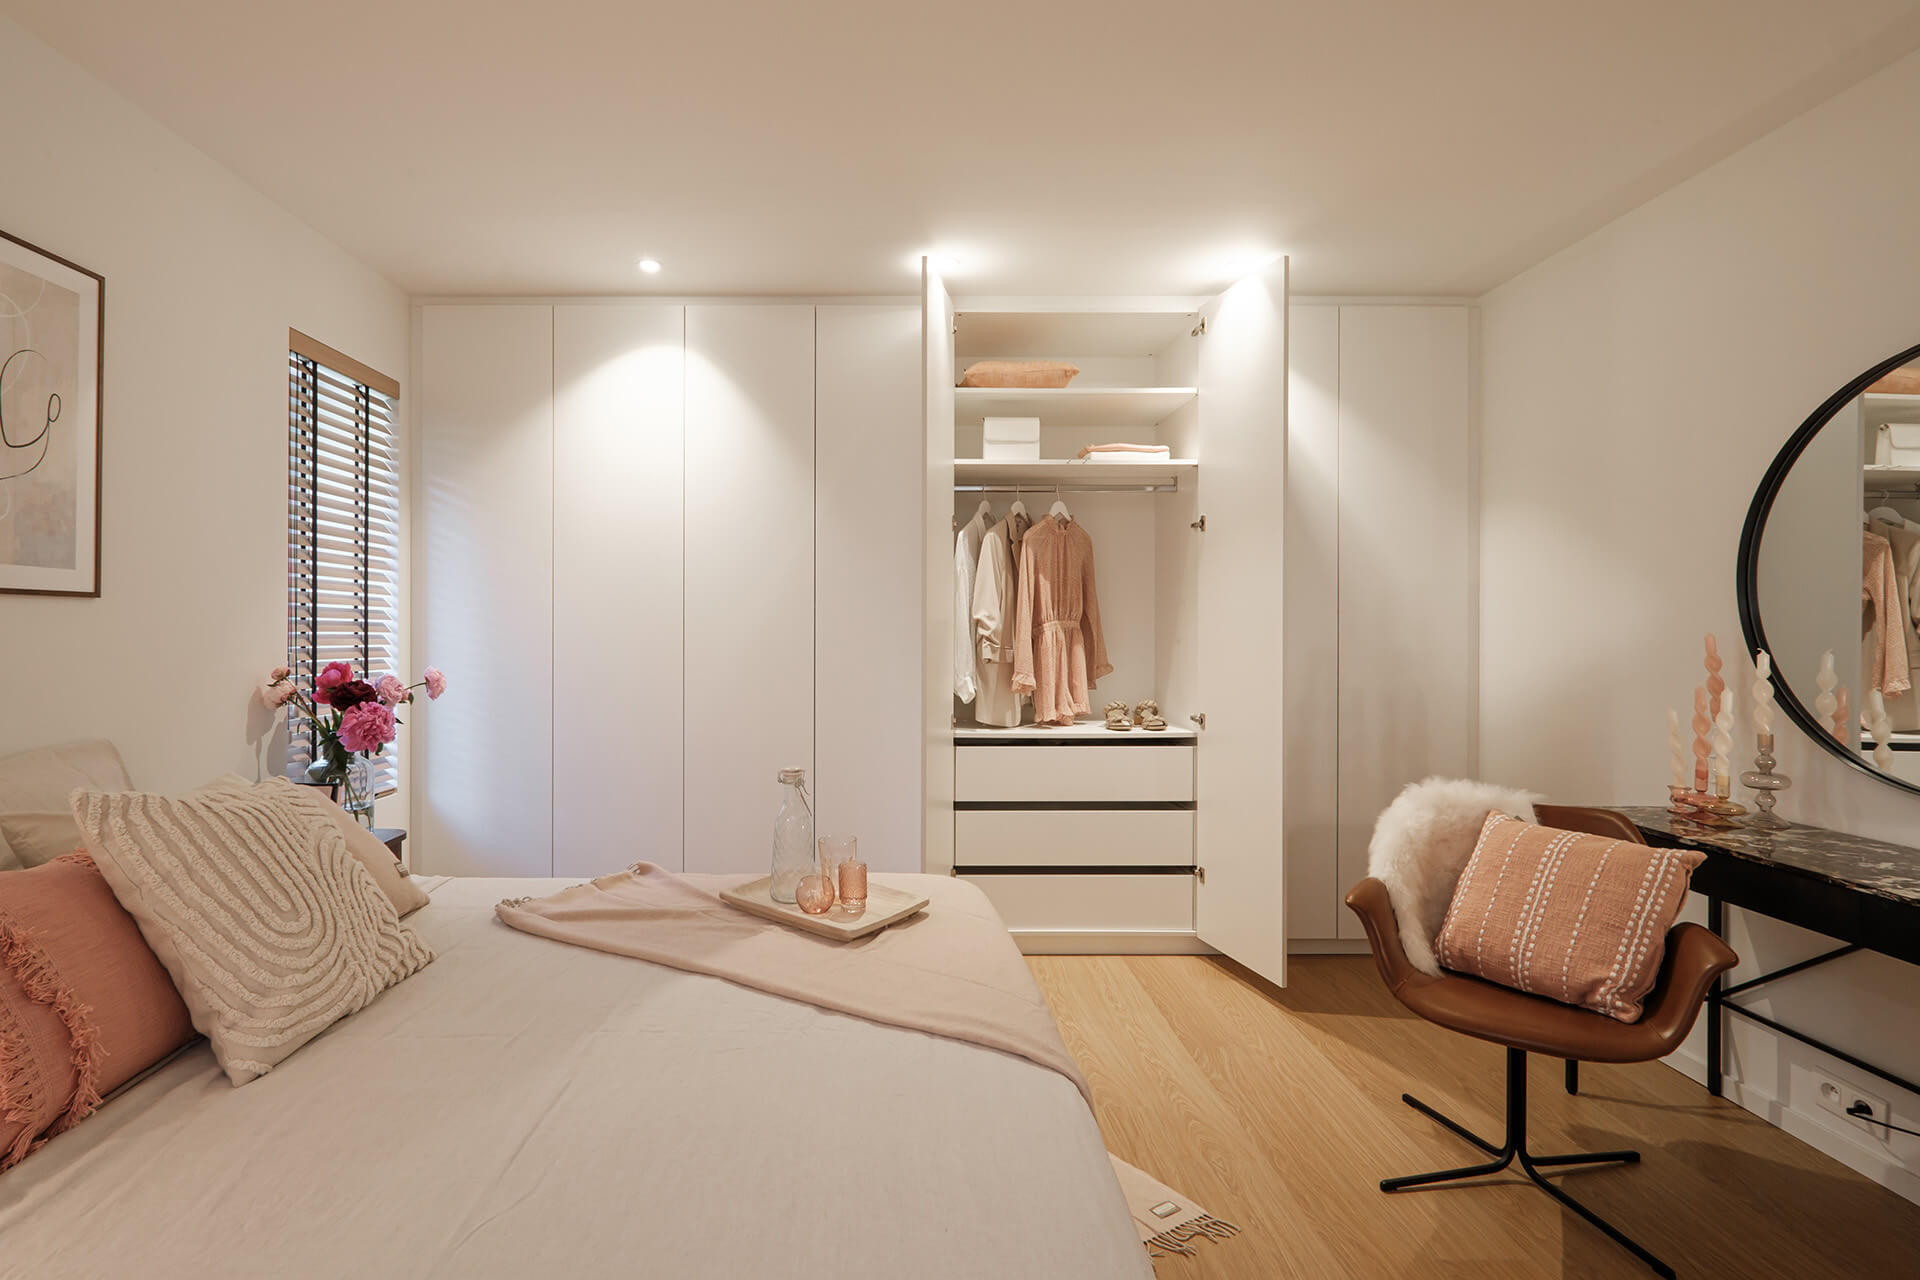 White custom-made closet between two walls from Maatkasten Online